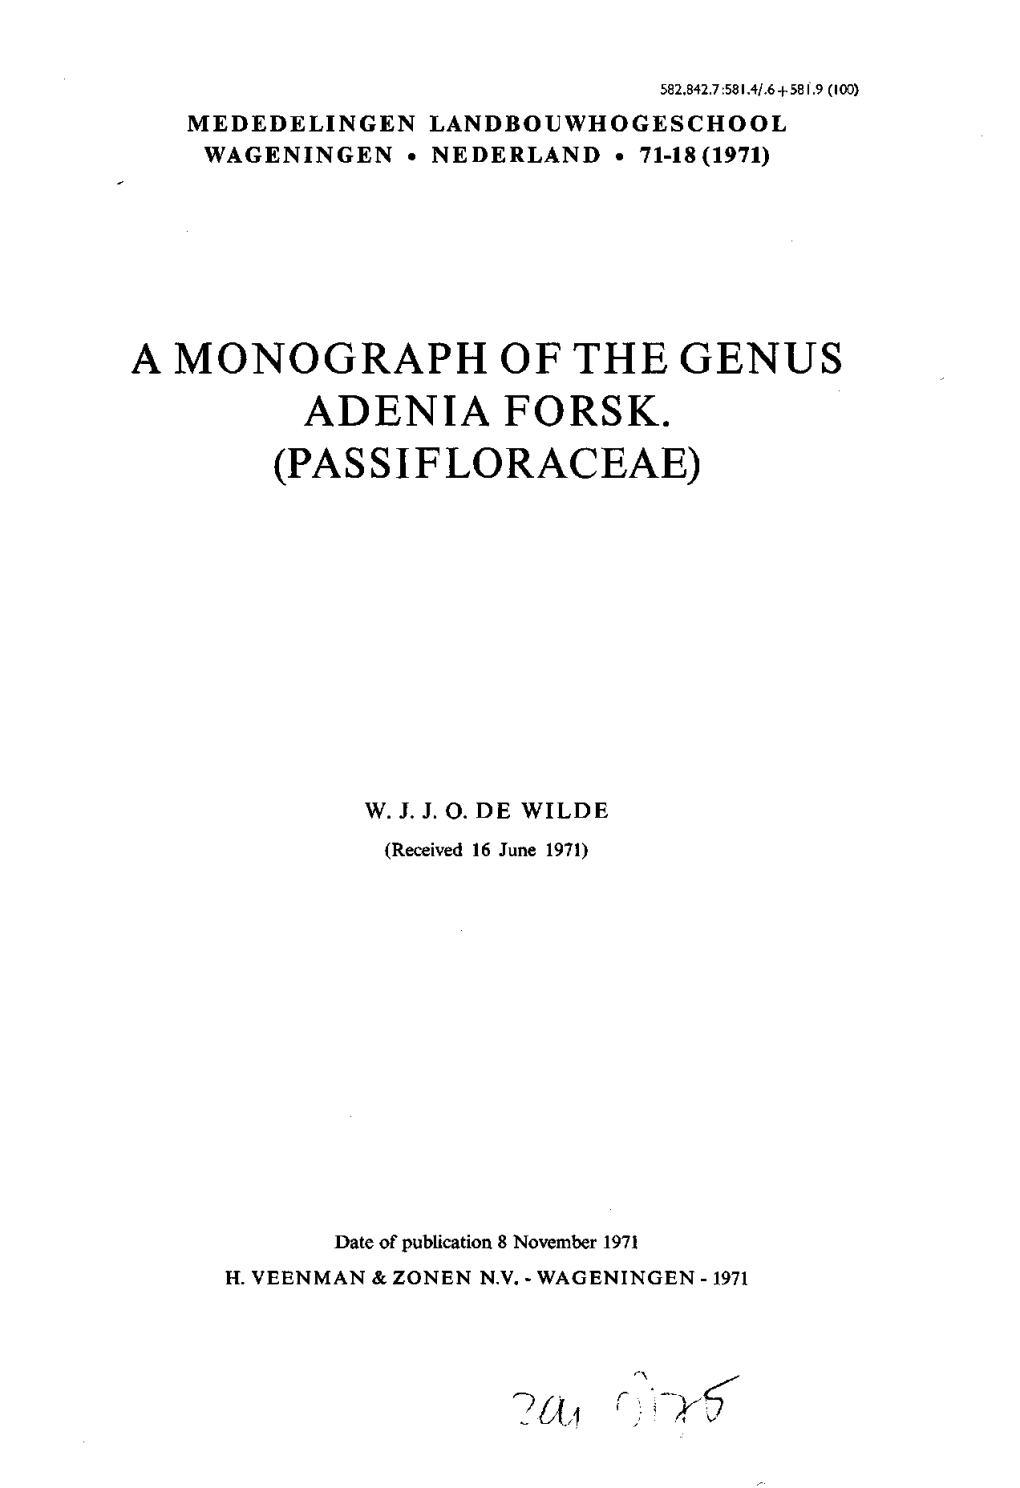 A Monograph of the Genus Adeniaforsk. (Passifloraceae)